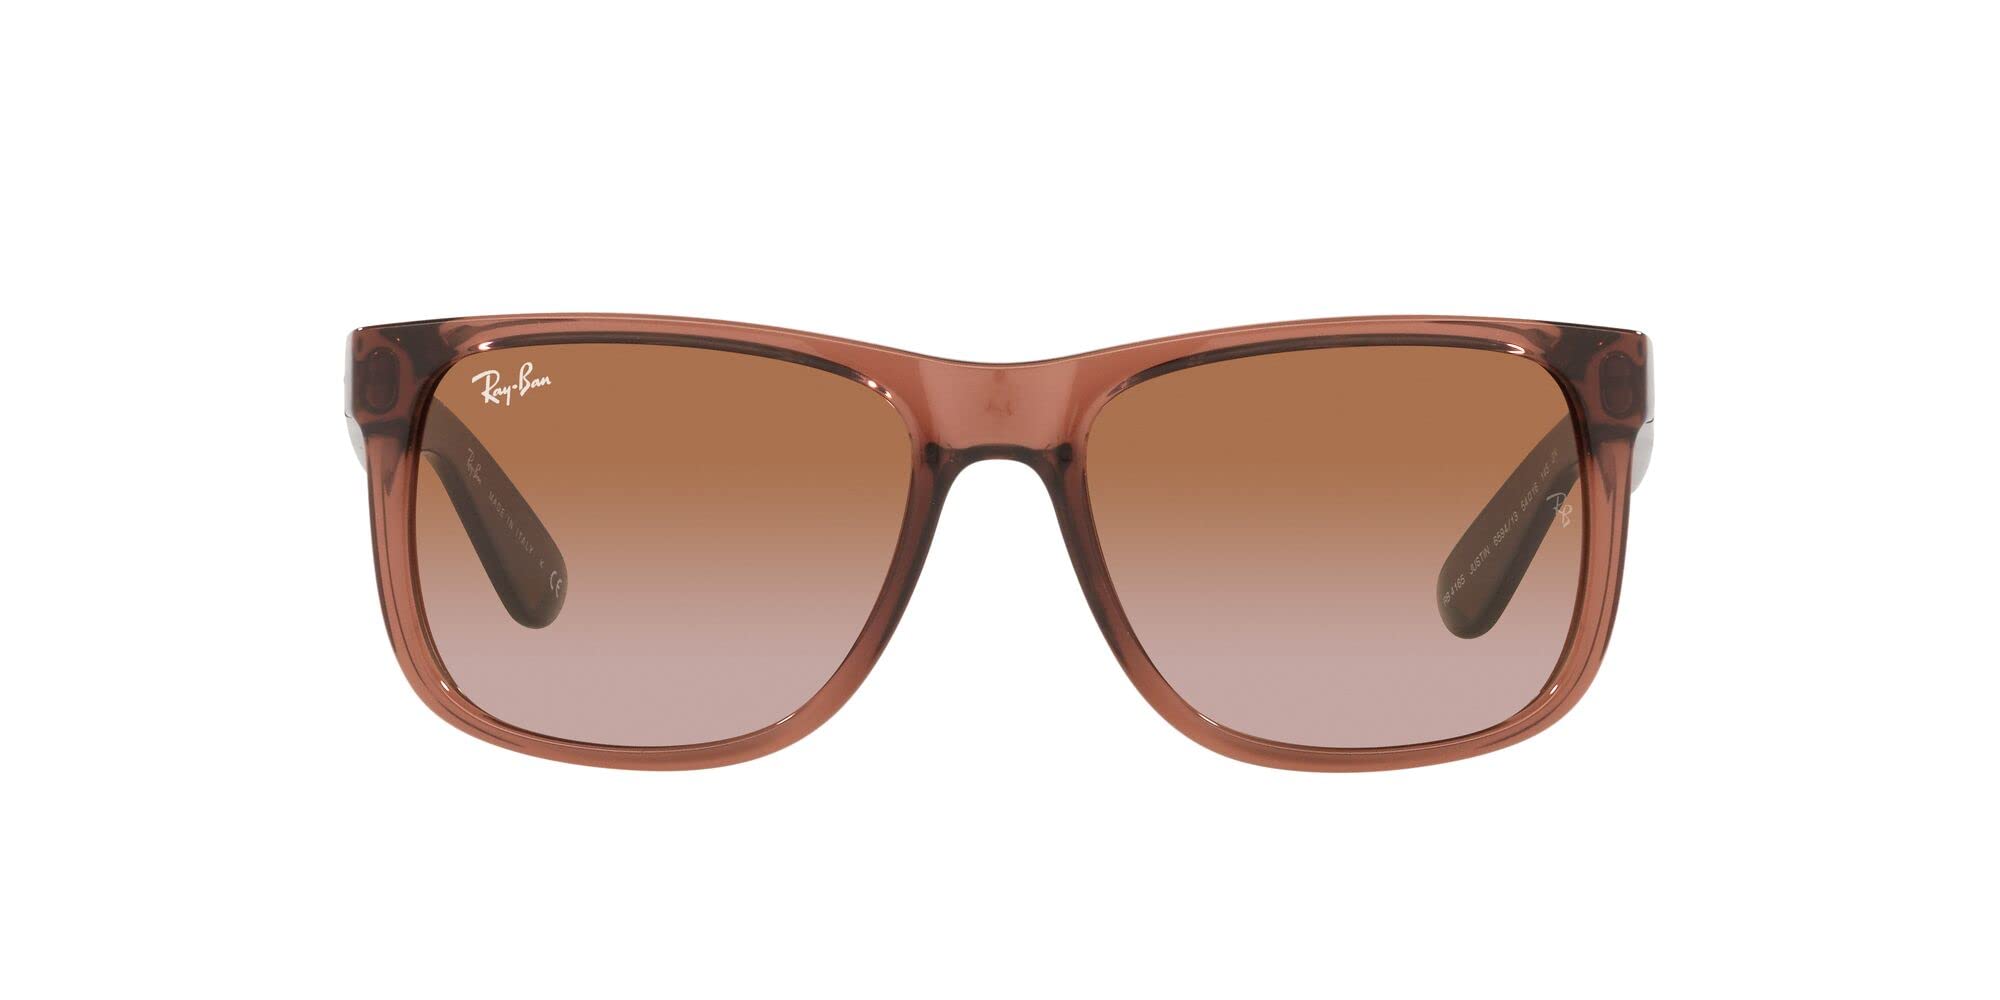 Ray-Ban RB4165 Justin Rectangular Sunglasses, Transparent Light Brown/Gradient Brown, 54 mm $77.5